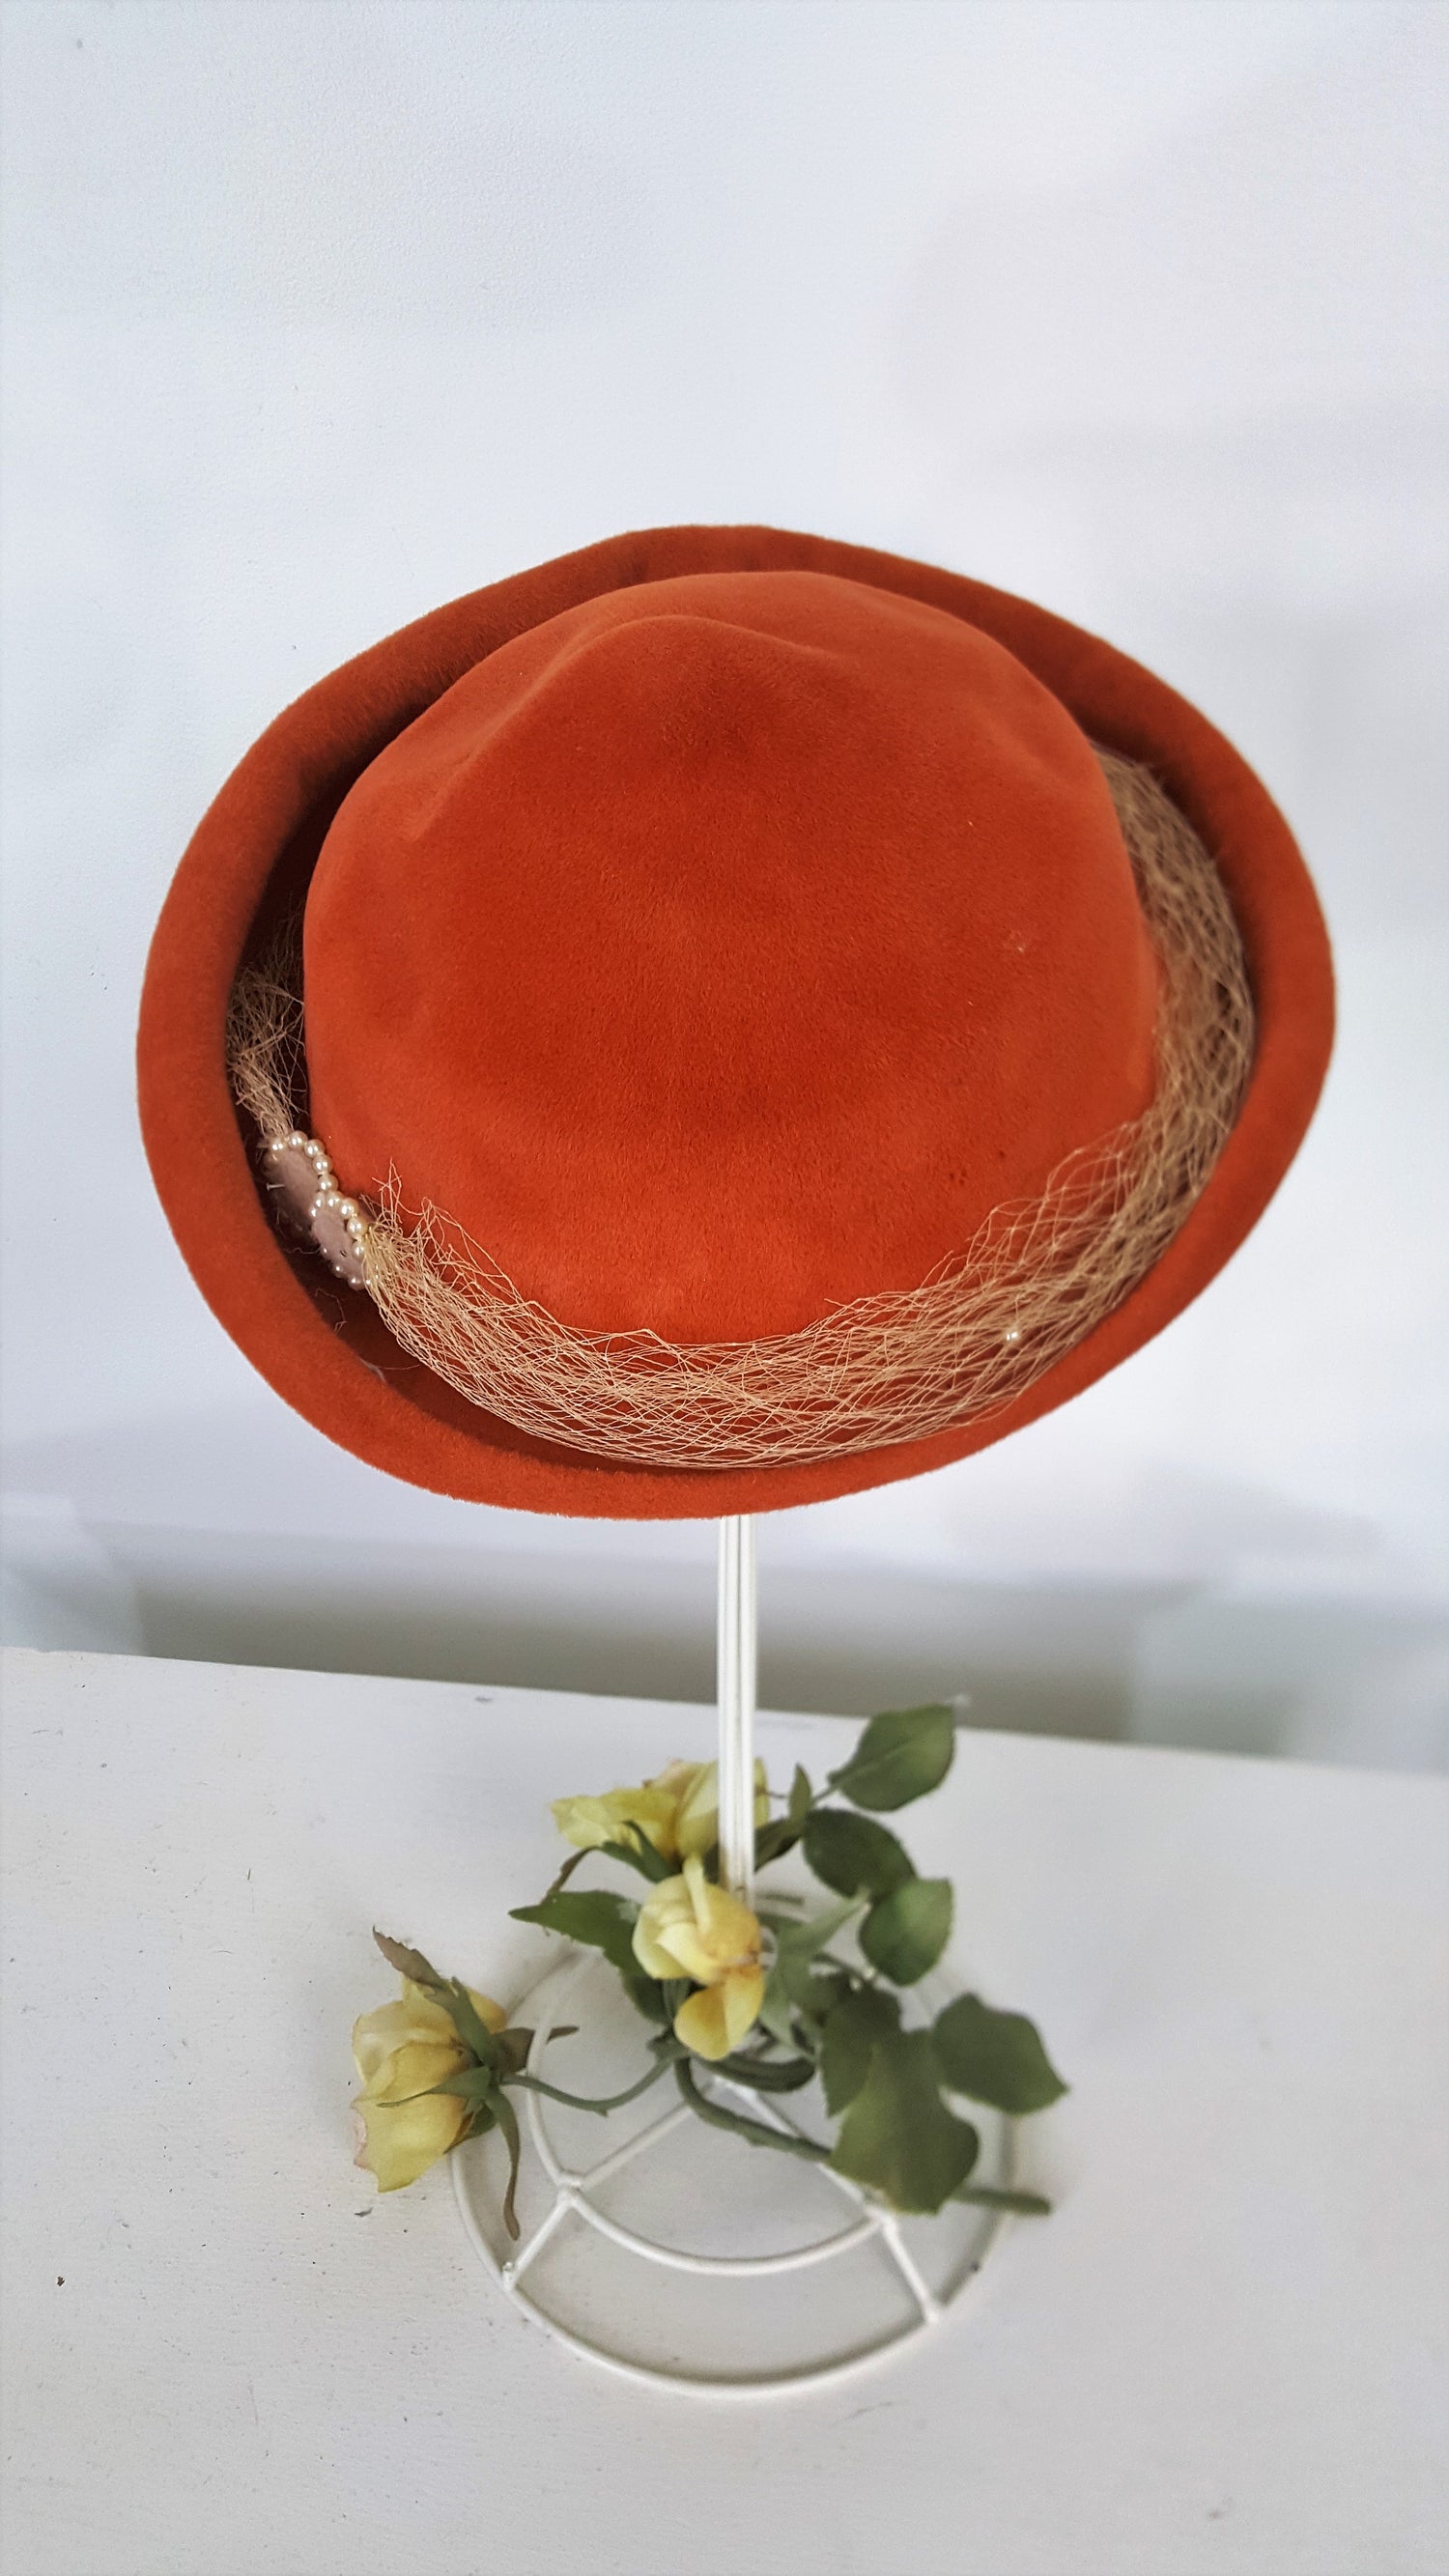 Vintage 1950s Dark Orange Wool Felt Hat with Birdcage Veil And Pearl Trim